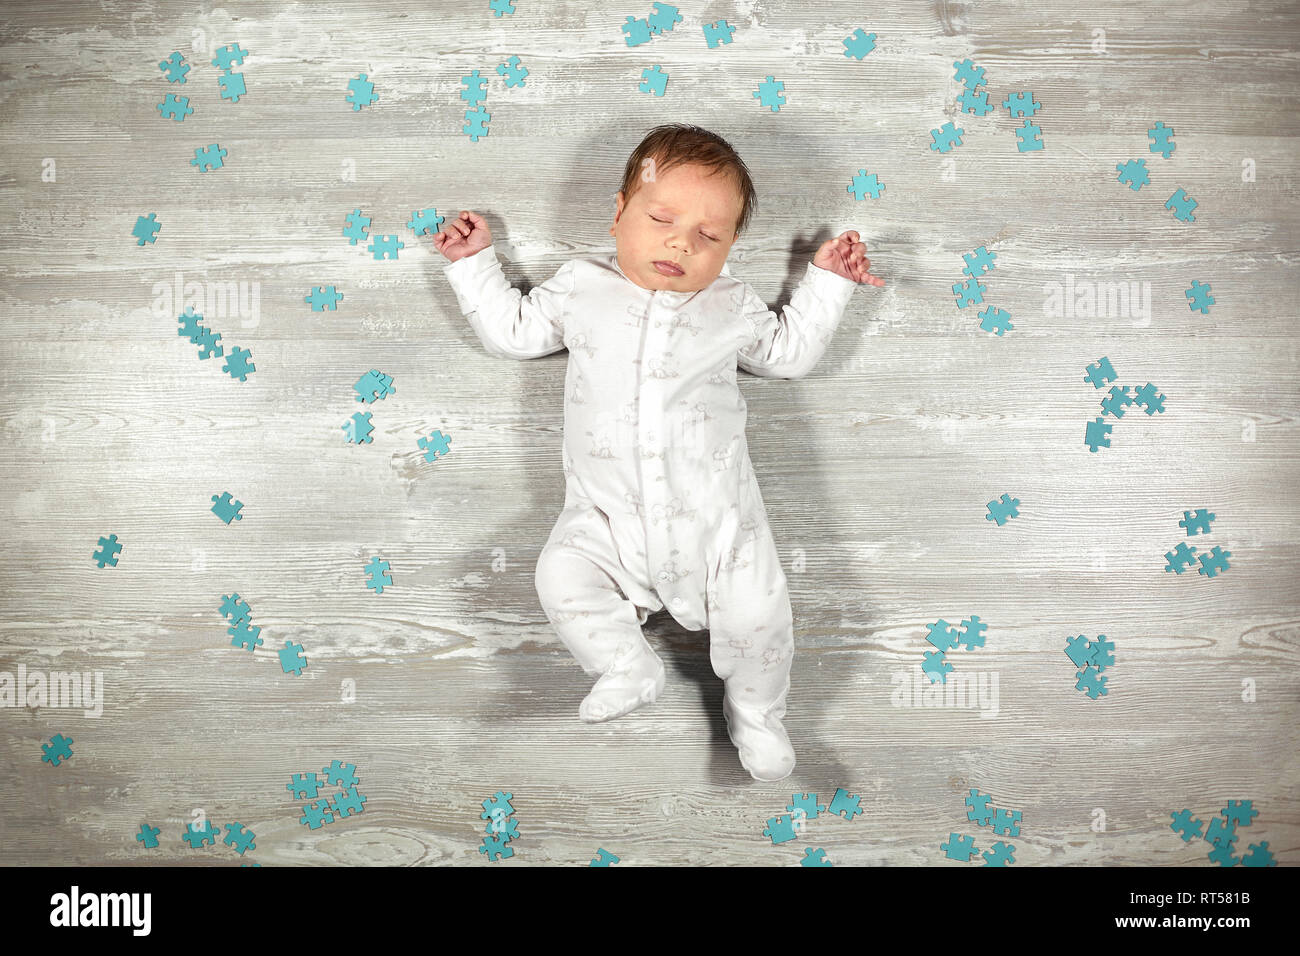 Newborn Baby Quietly Sleeps On A Wooden Floor Blue Puzzles Around